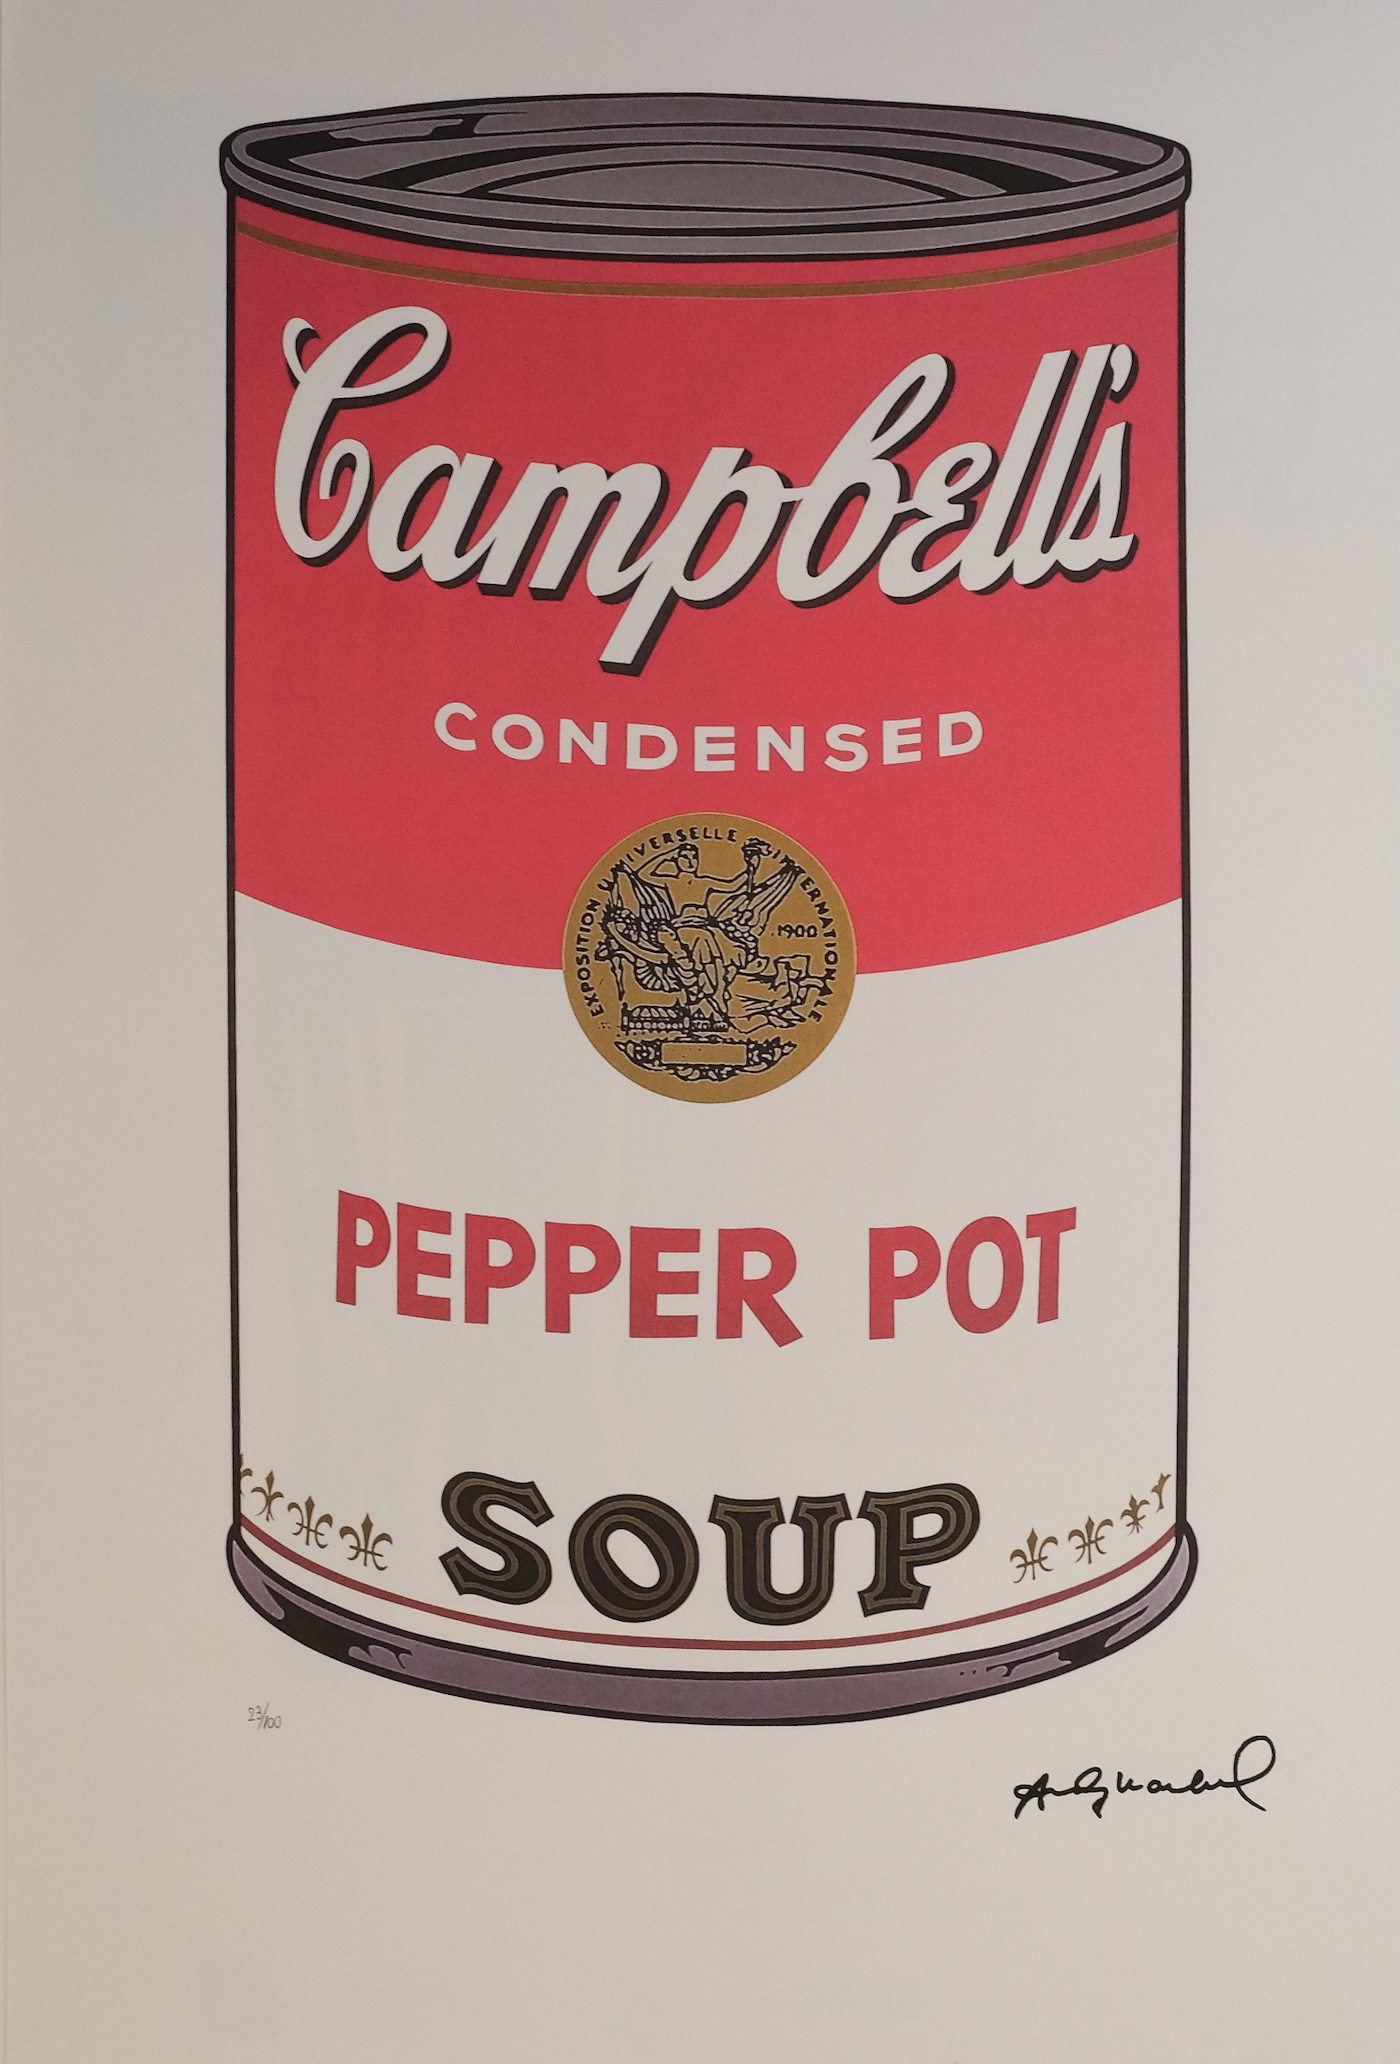 Andy Warhol - Pepper Pot Soup